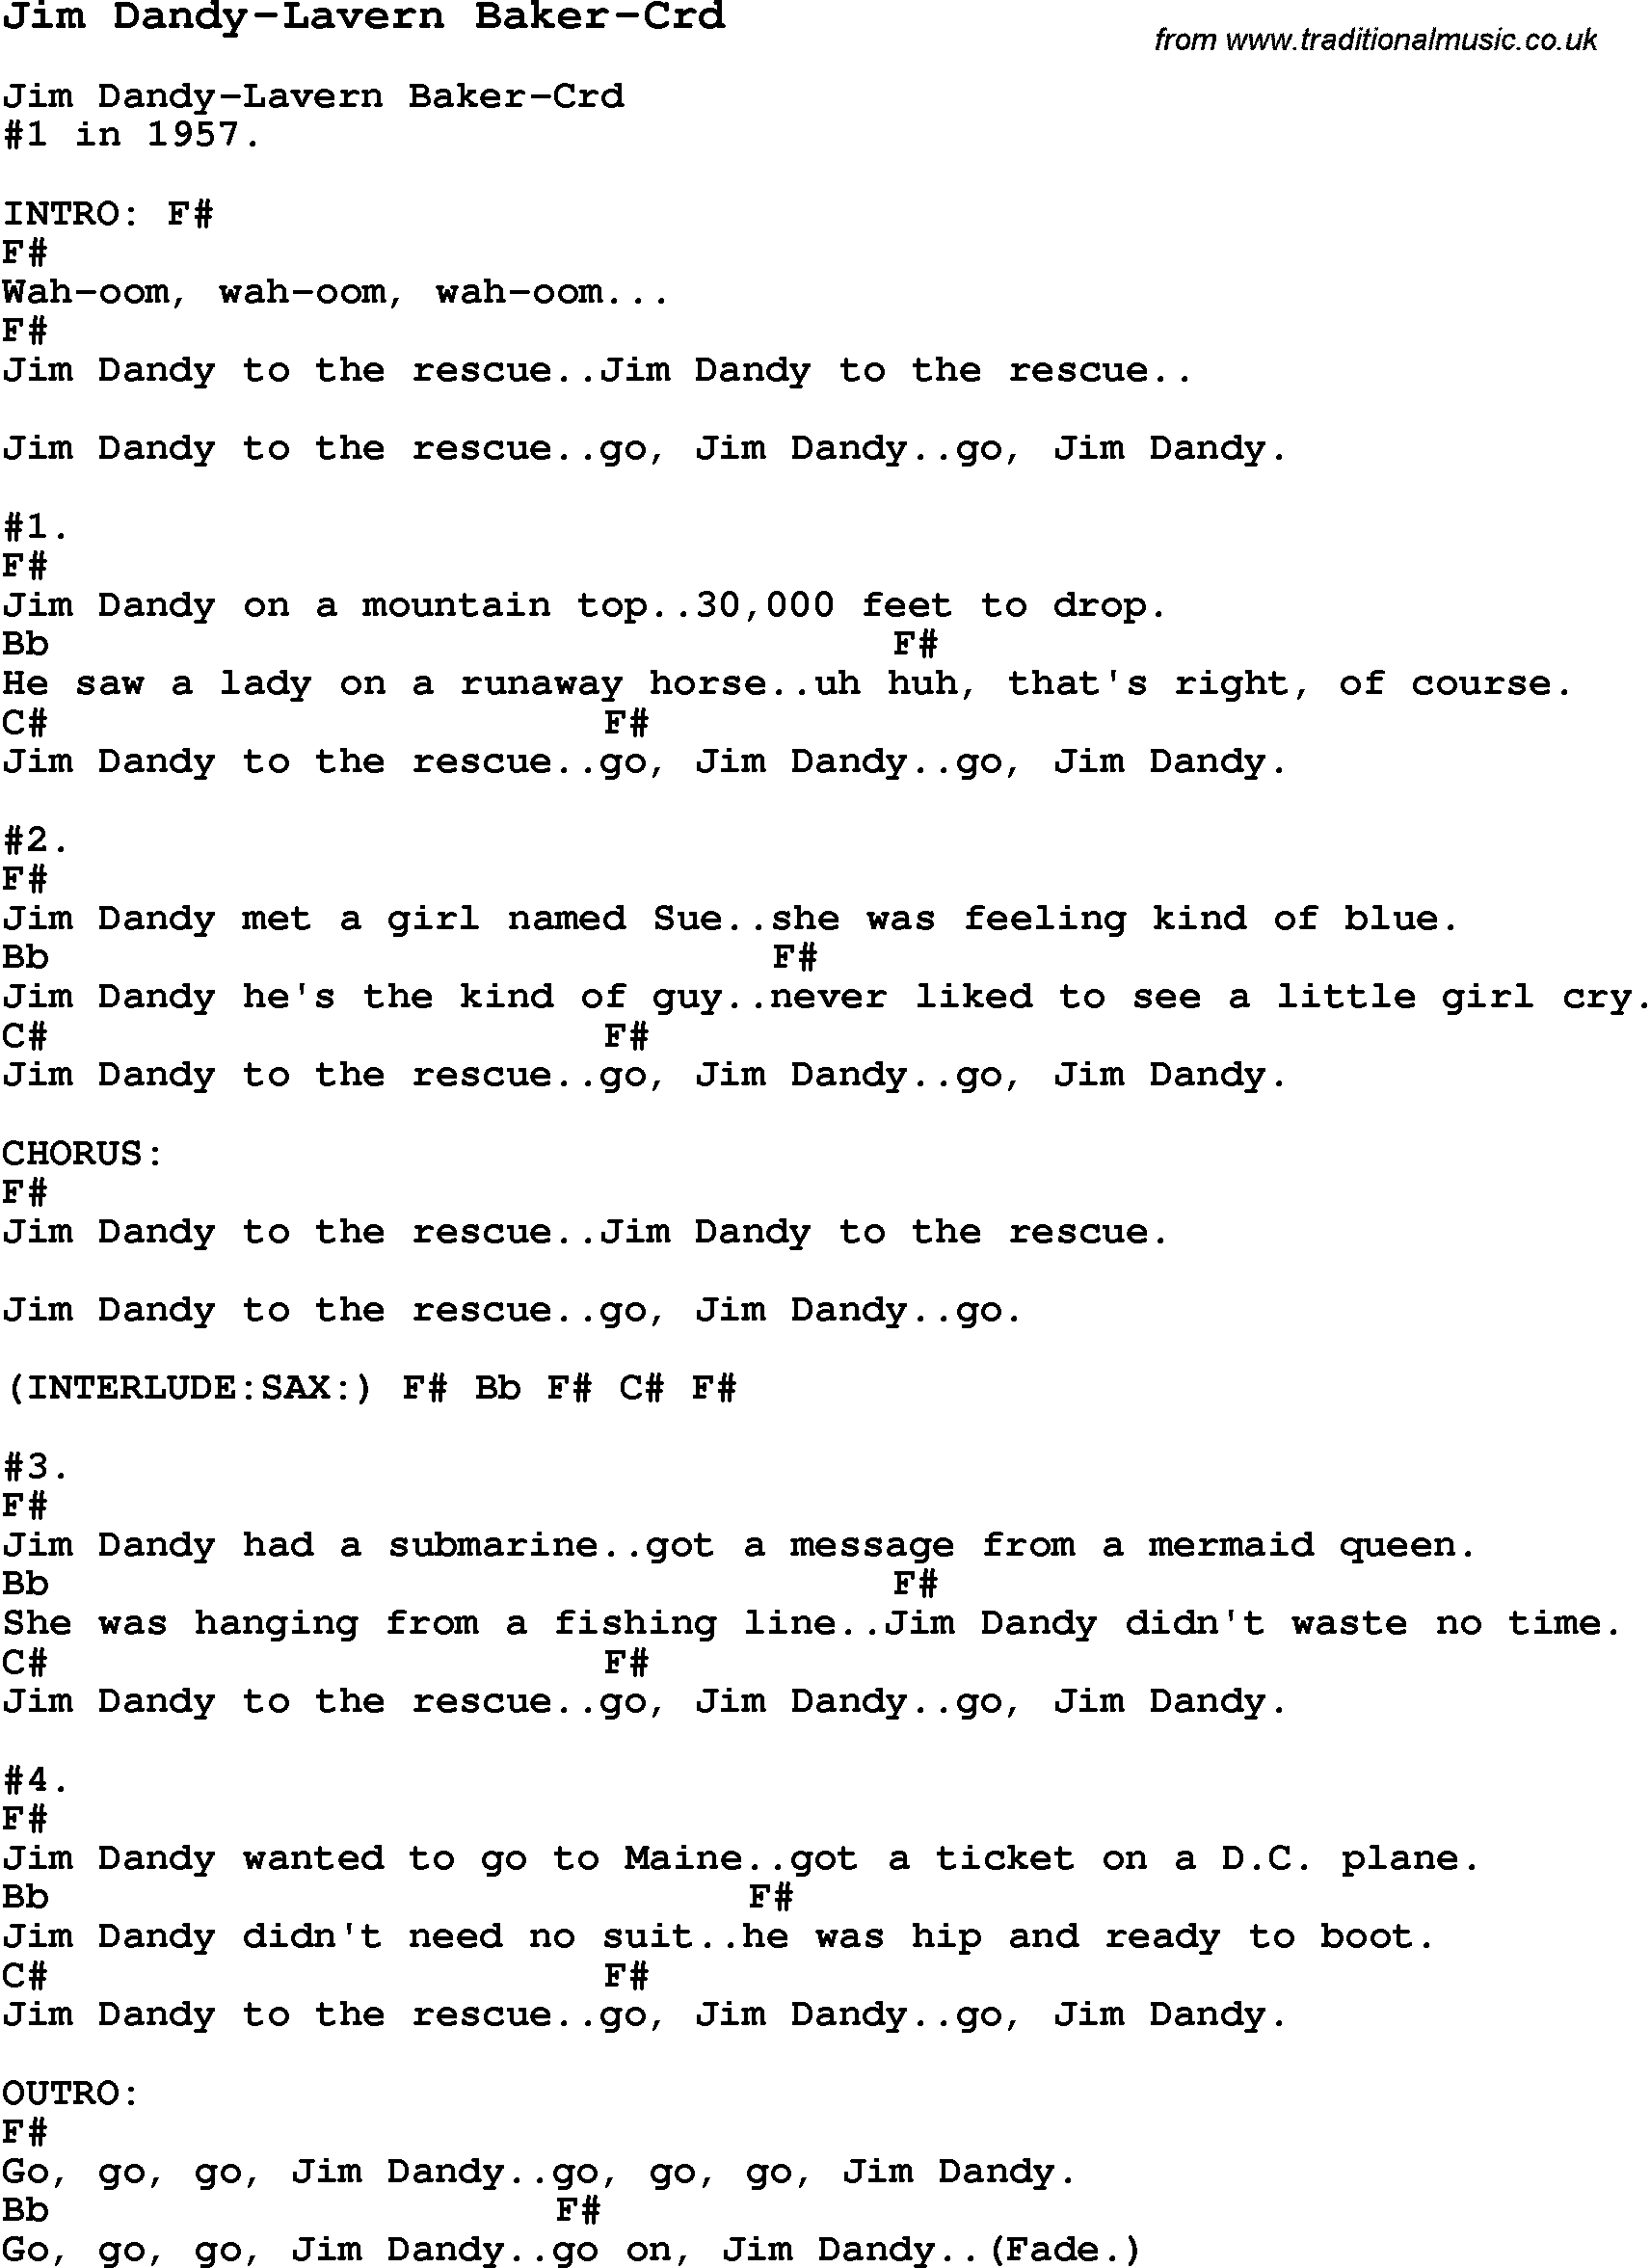 Skiffle Song Lyrics for Jim Dandy-Lavern Baker-Crd.